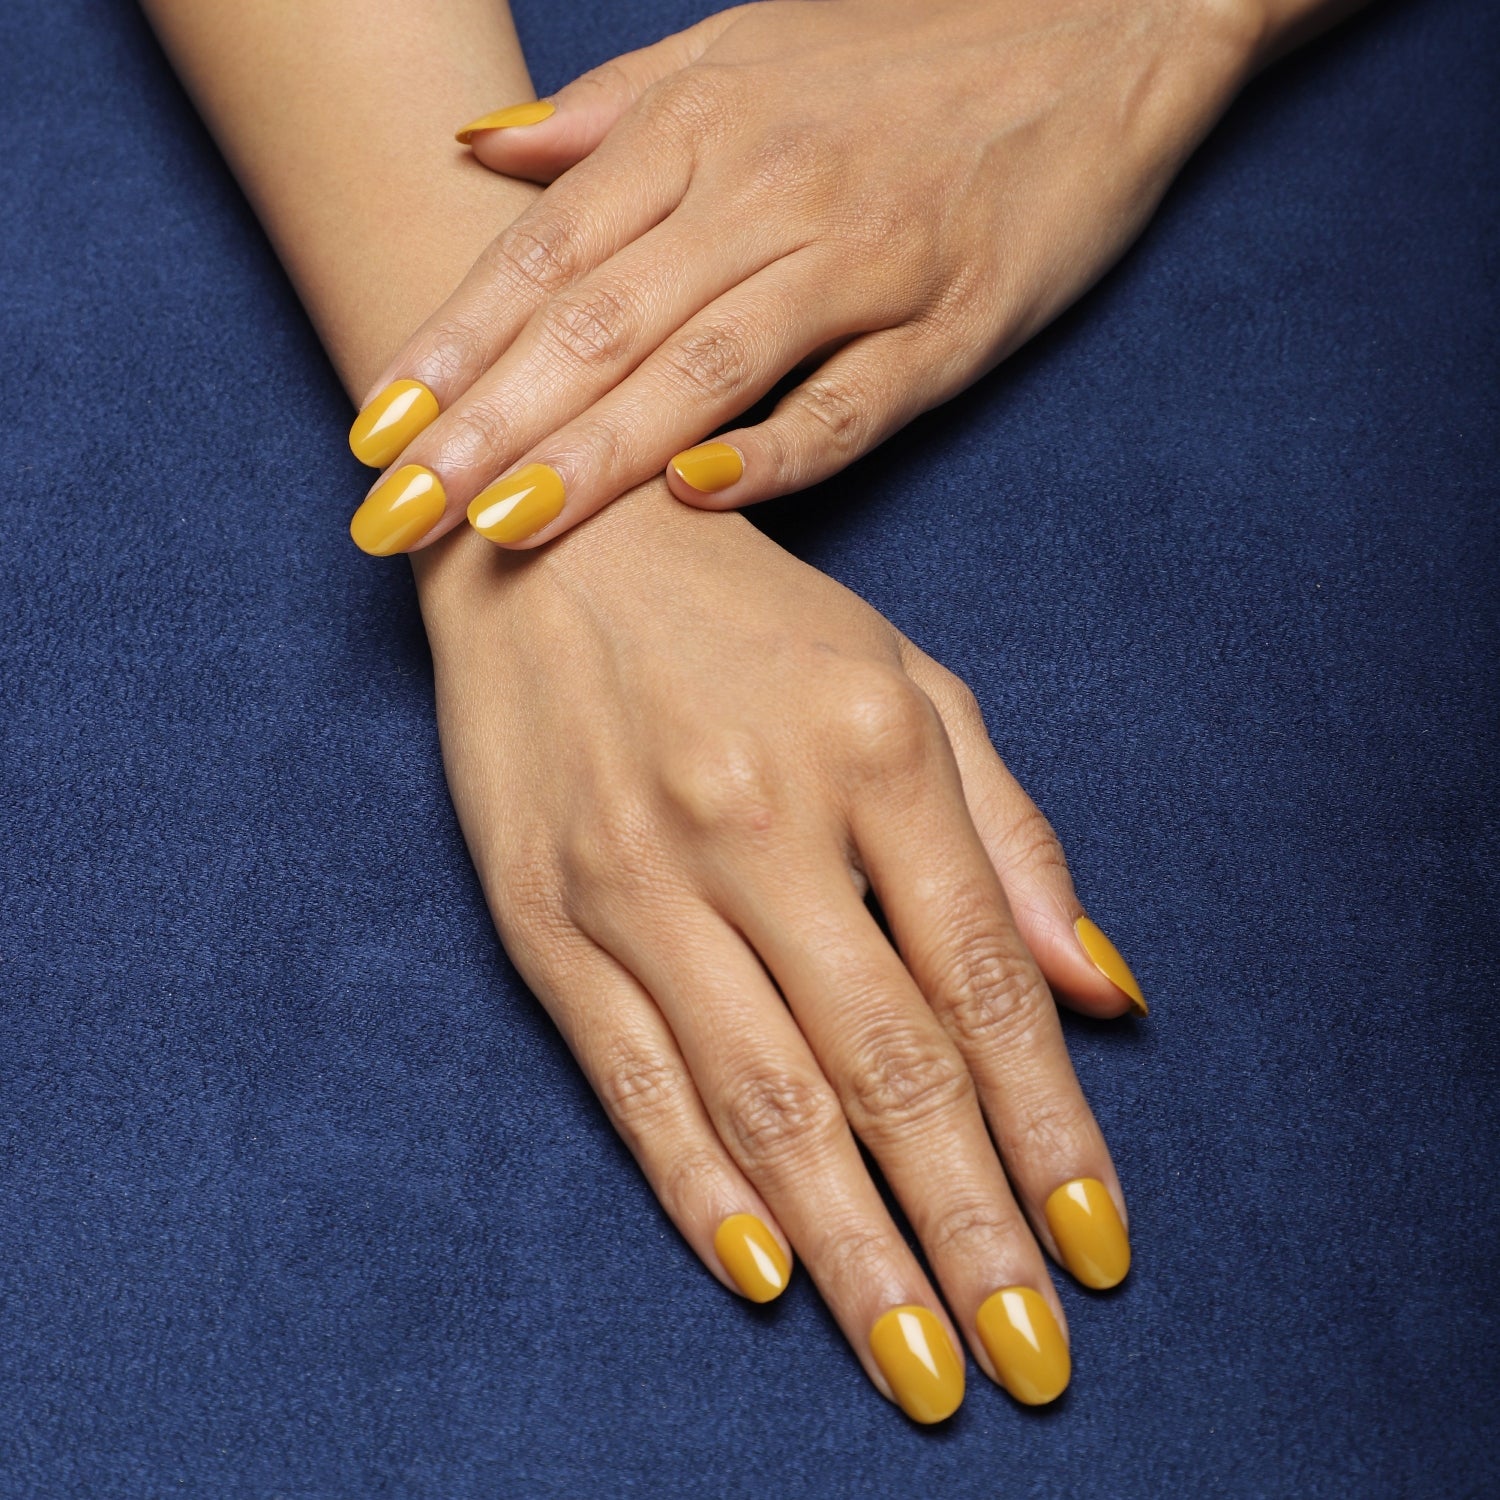 Lick Nail Glossy Finish Mustard Yellow Oval Shape Press On Nails Pack Of 24 Pcs